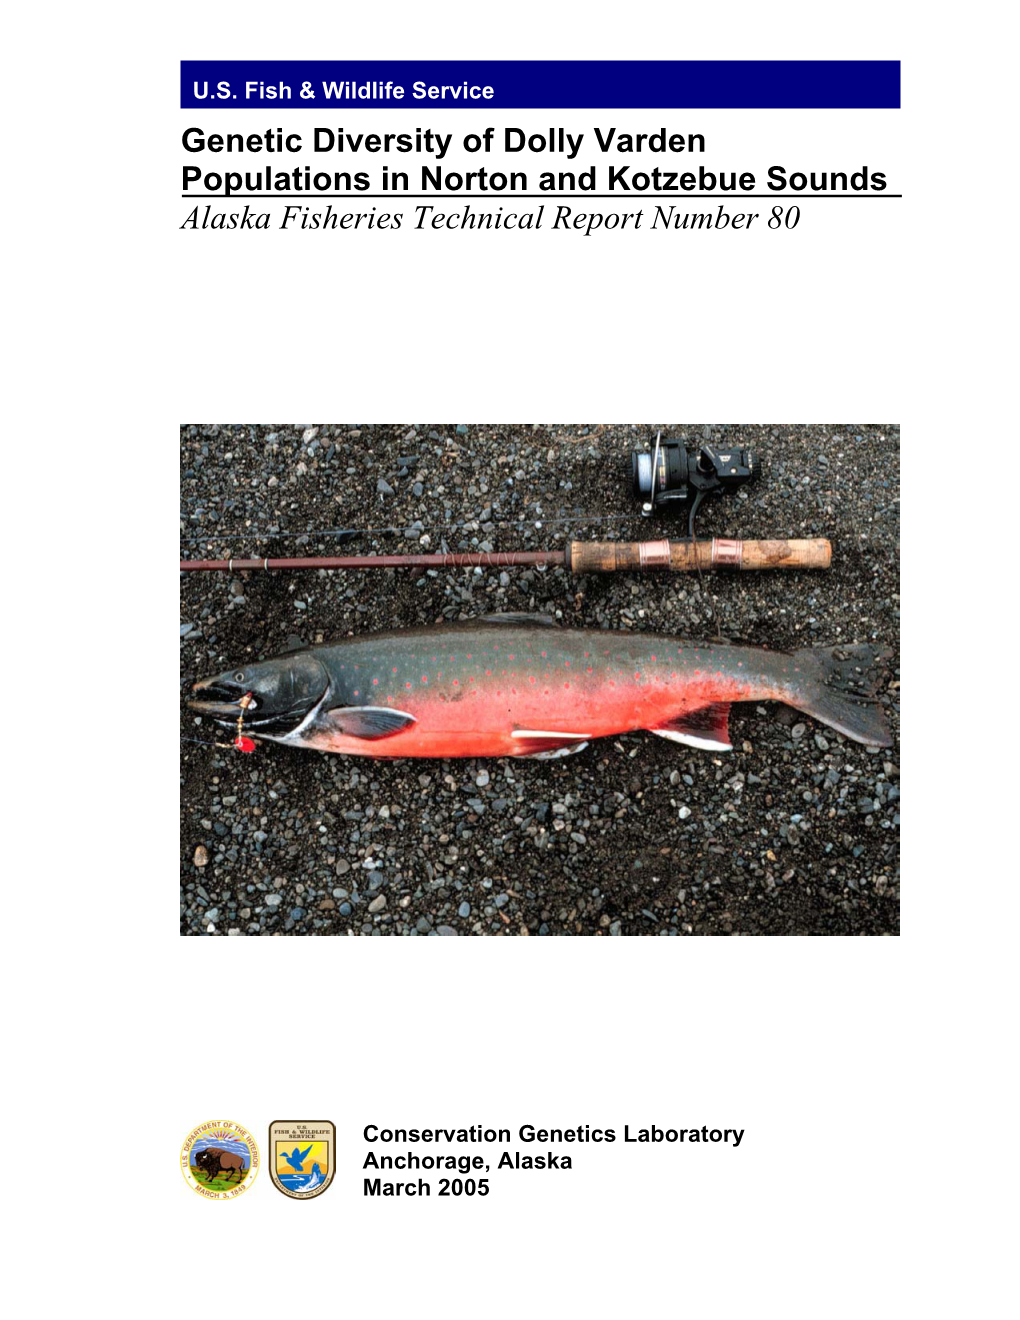 Genetic Diversity of Dolly Varden Populations in Norton and Kotzebue Sounds Alaska Fisheries Technical Report Number 80